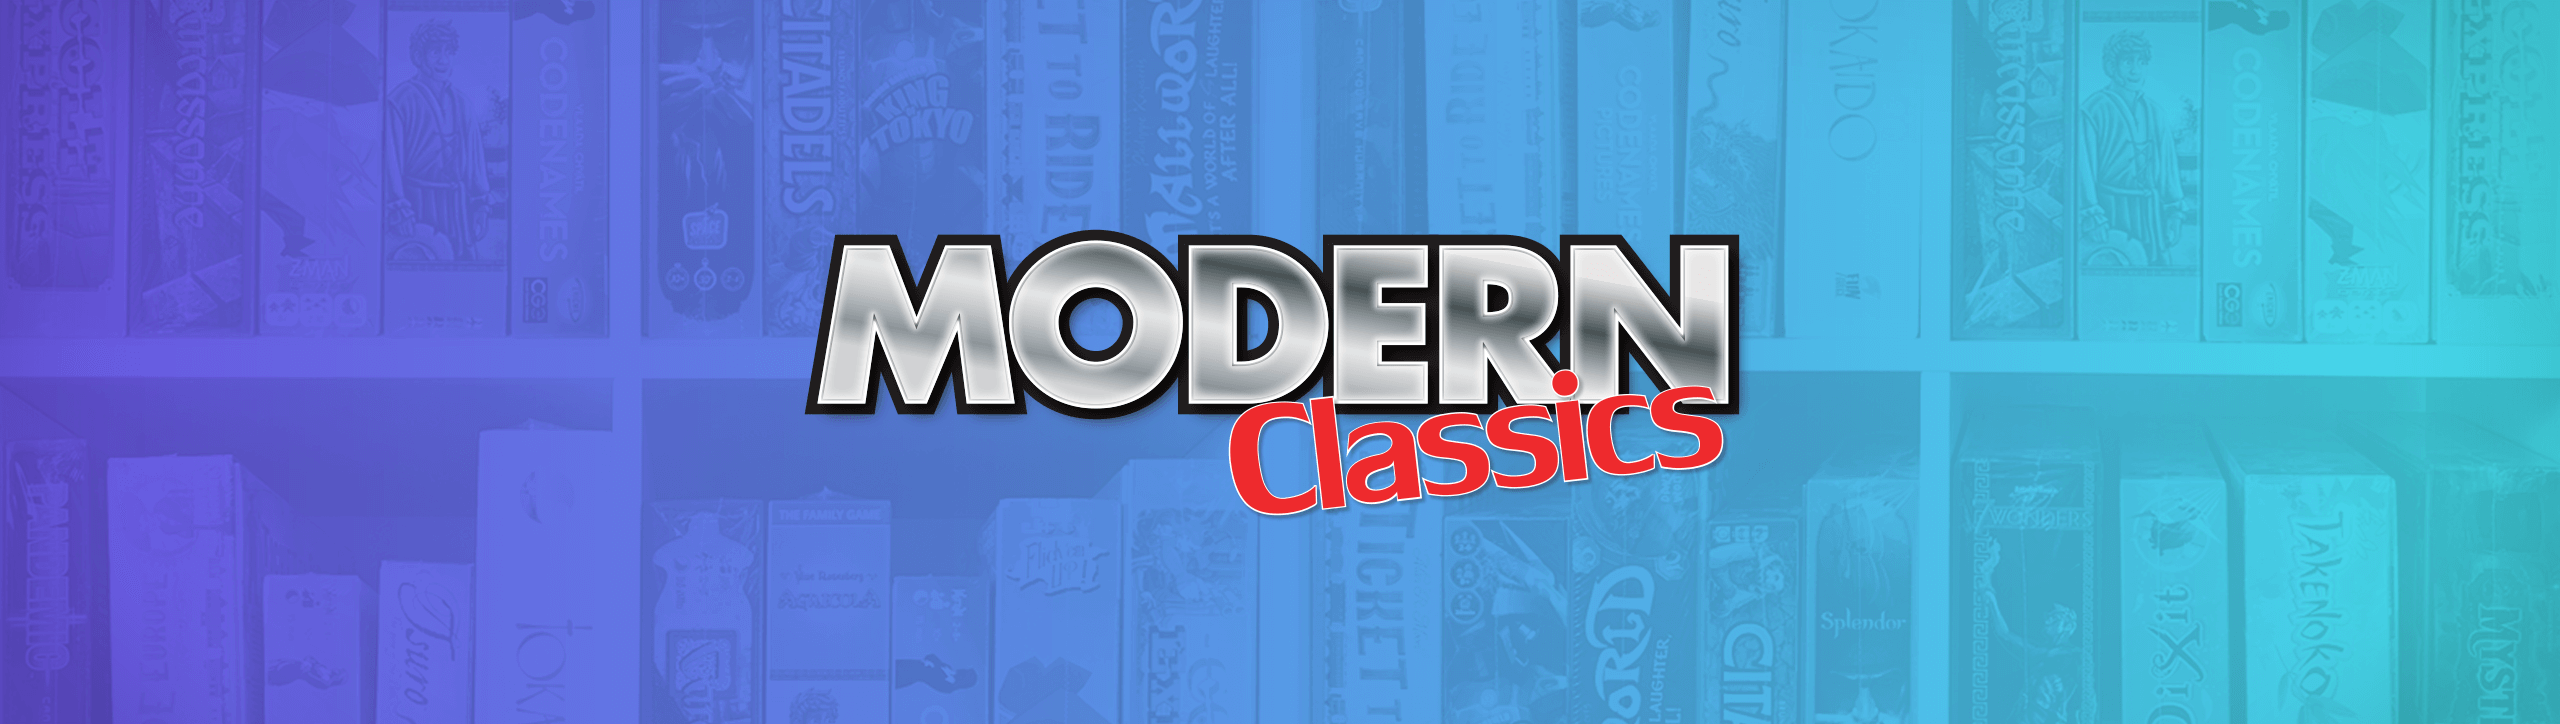 Enigma modern classics logo